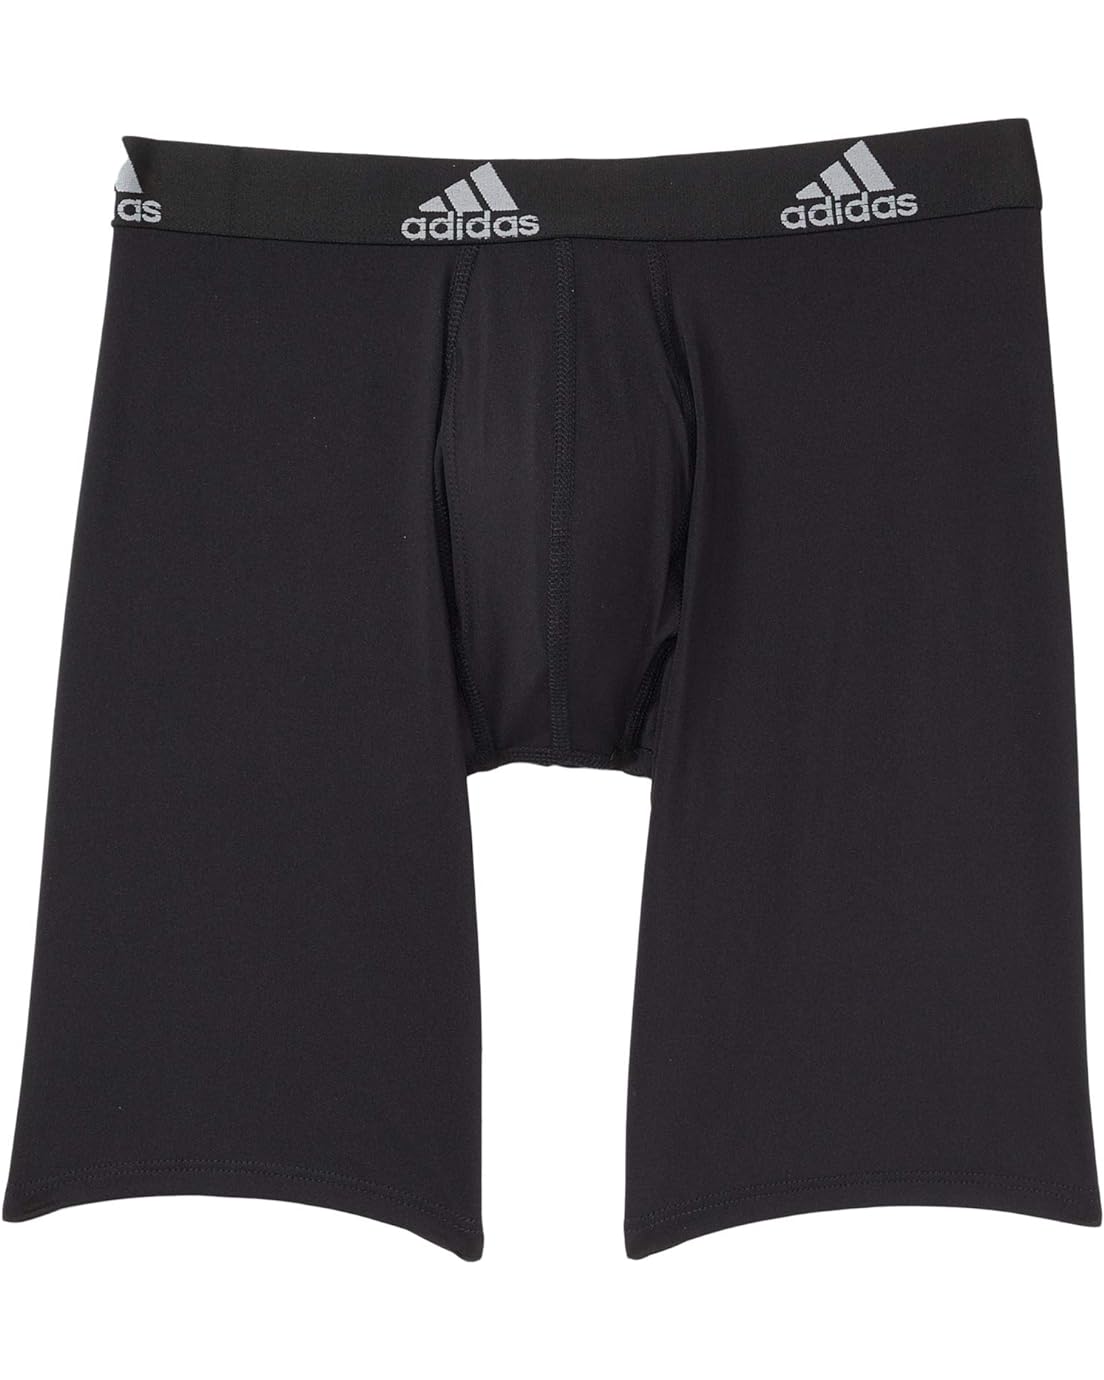 Adidas Performance Long Boxer Brief Underwear 3-Pack